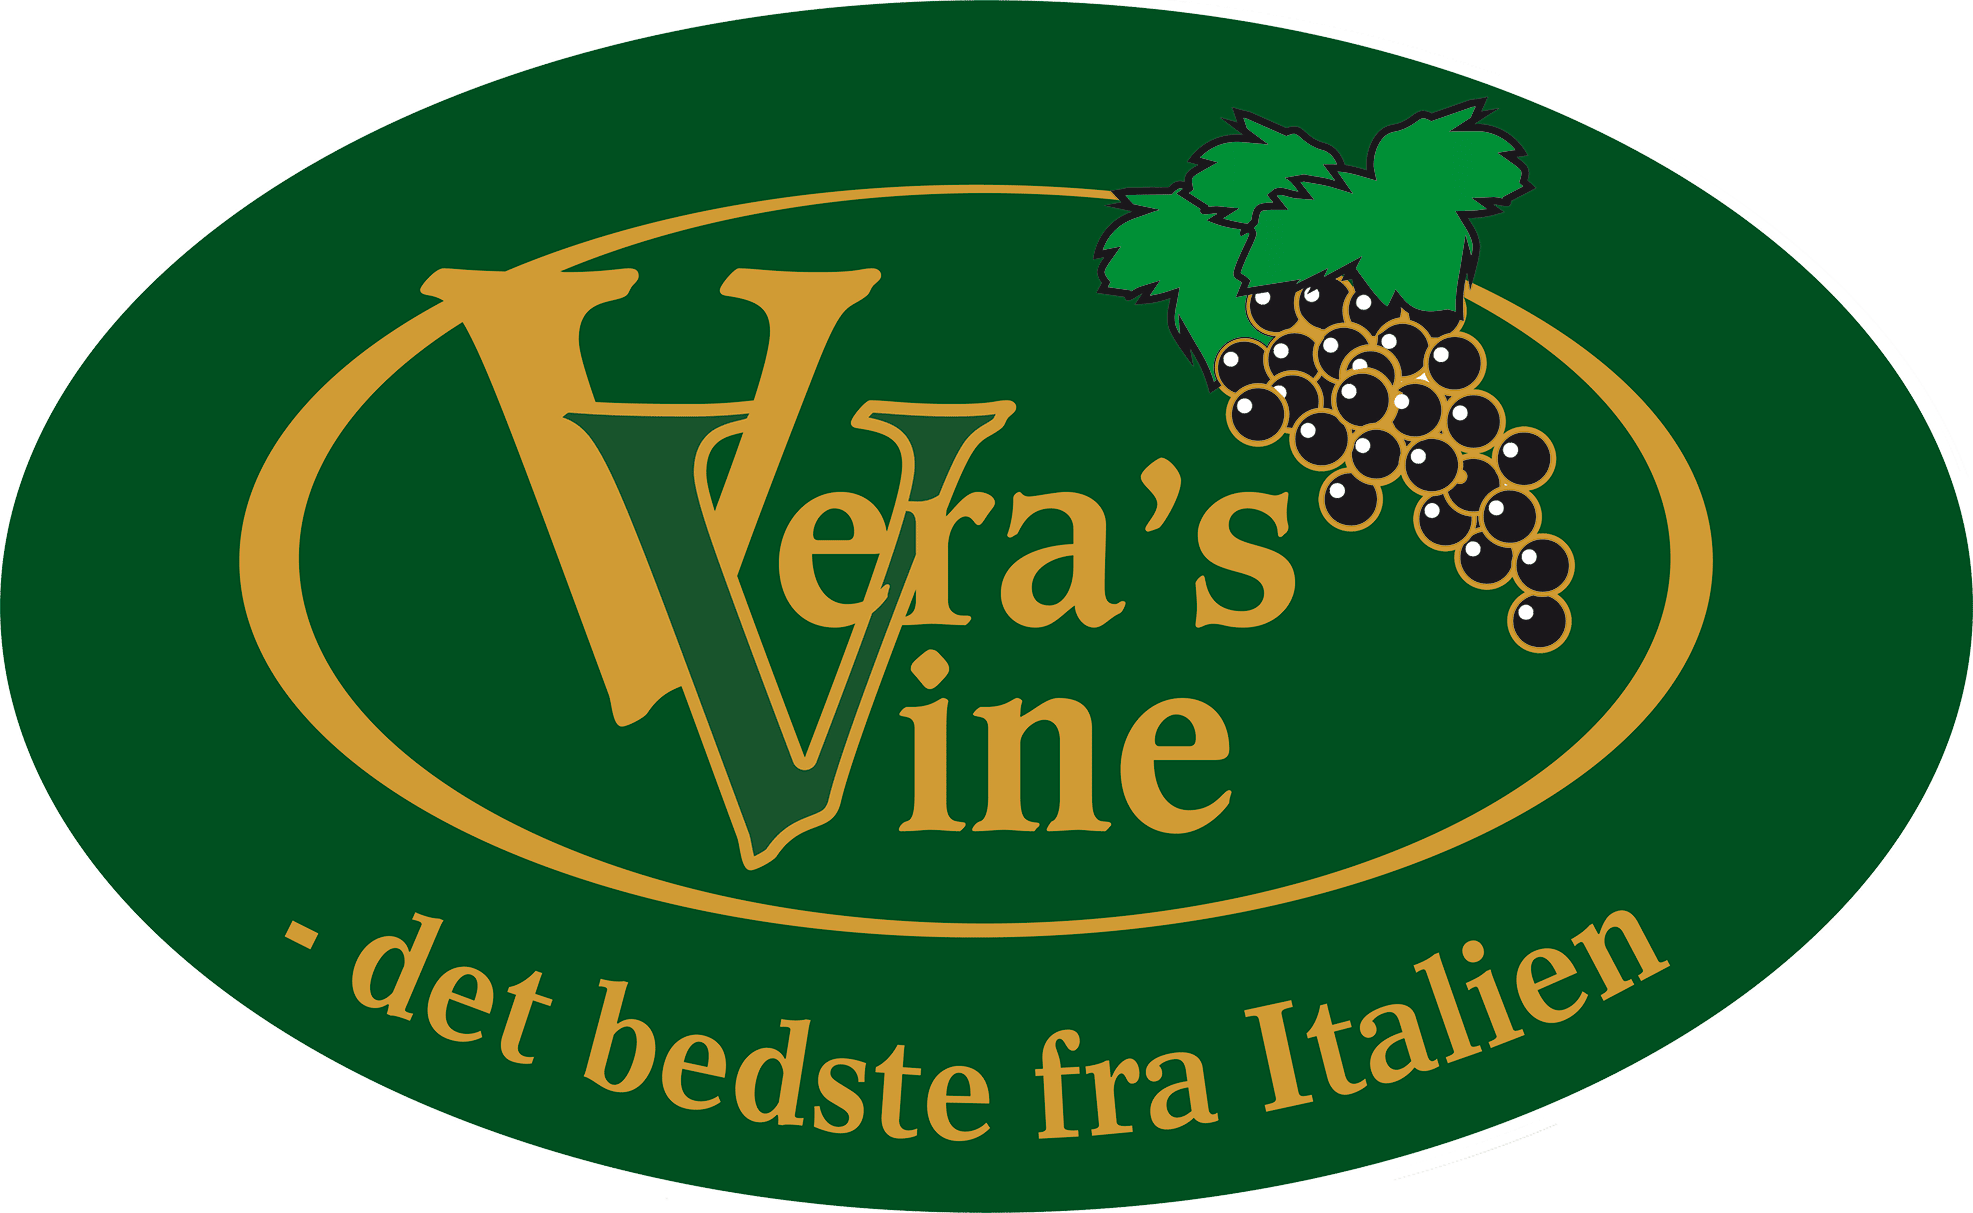 Veras vine & landbrug